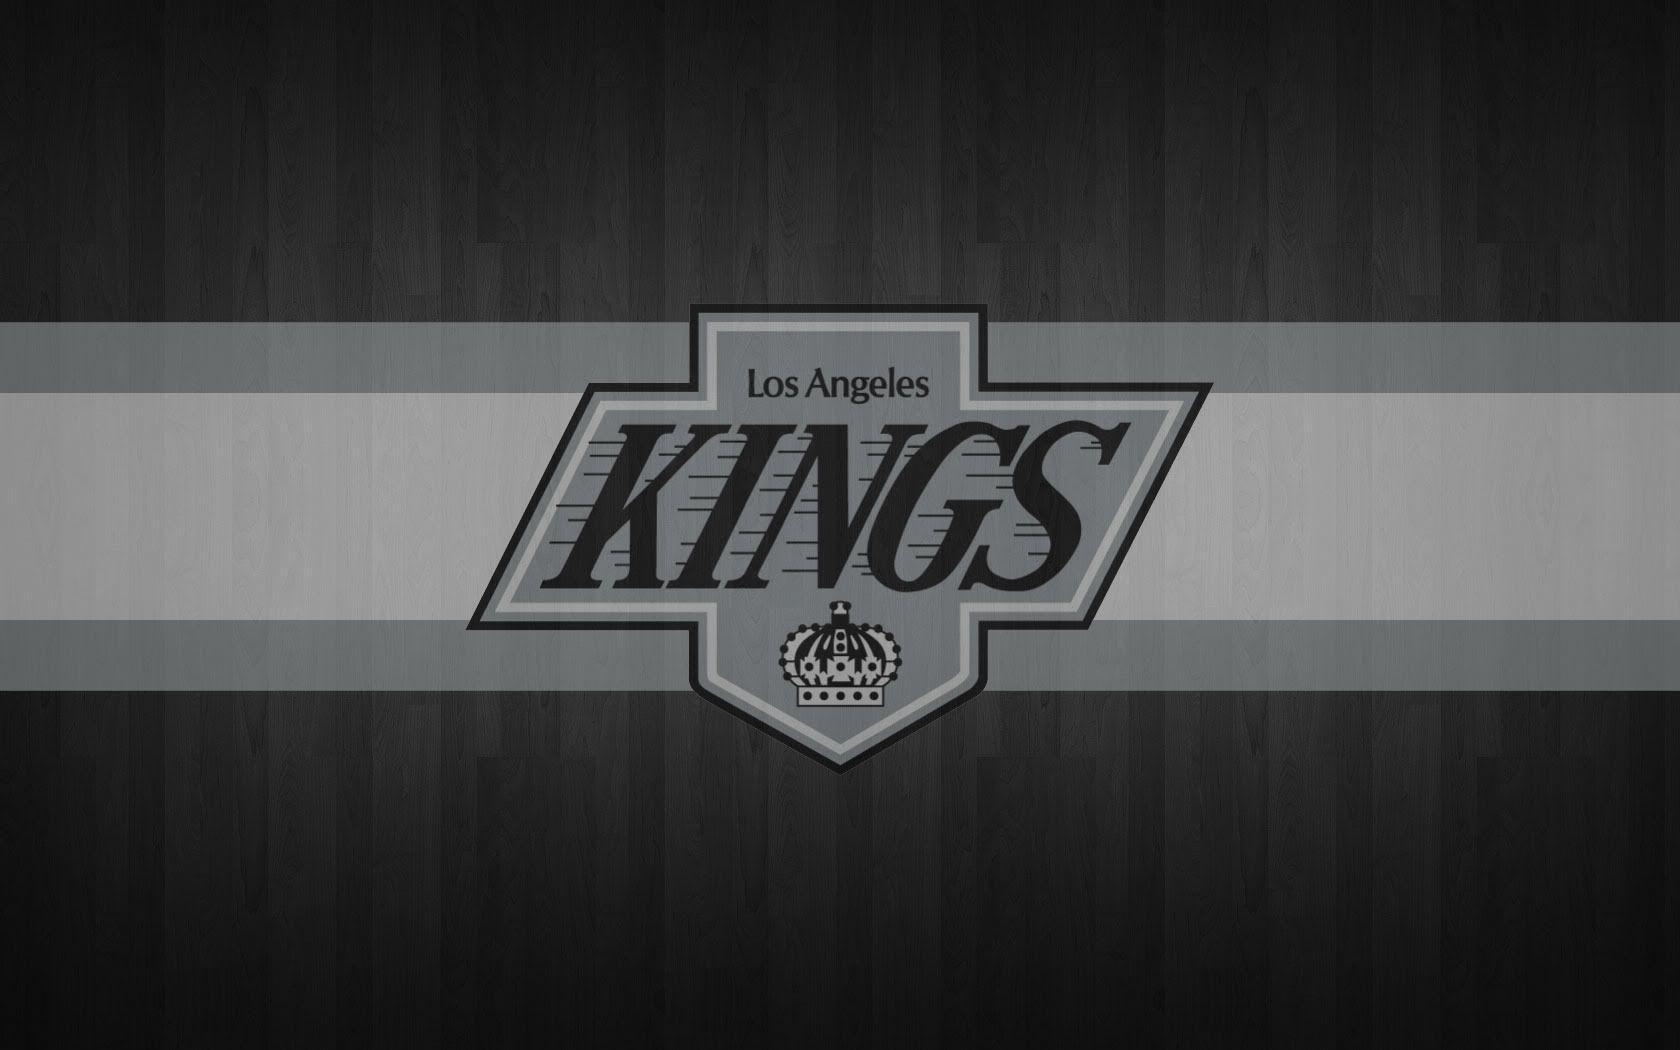 LA Kings wallpapers for desktop, iPhone & iPad